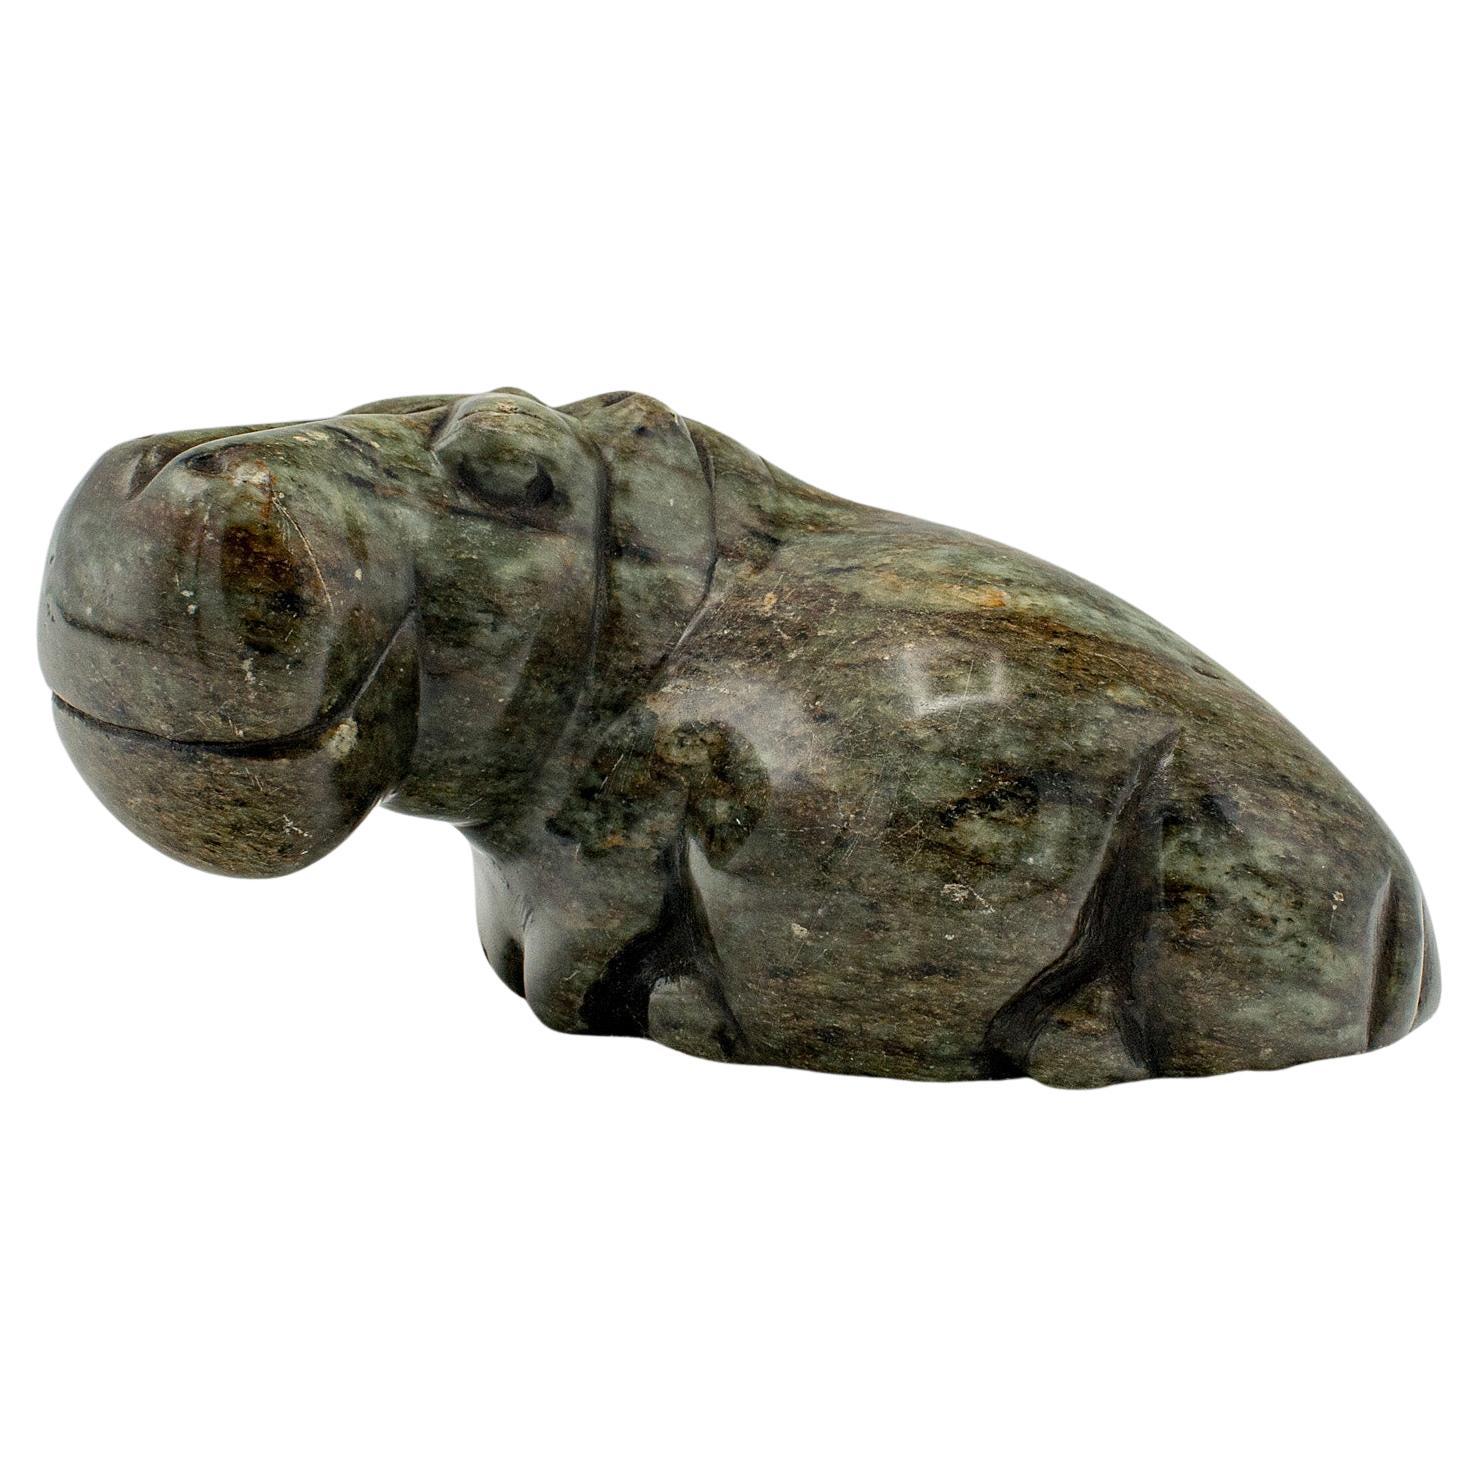 Petite figurine ancienne d'hippocampe, africaine, pierre de savon, sculptée à la main, victorienne